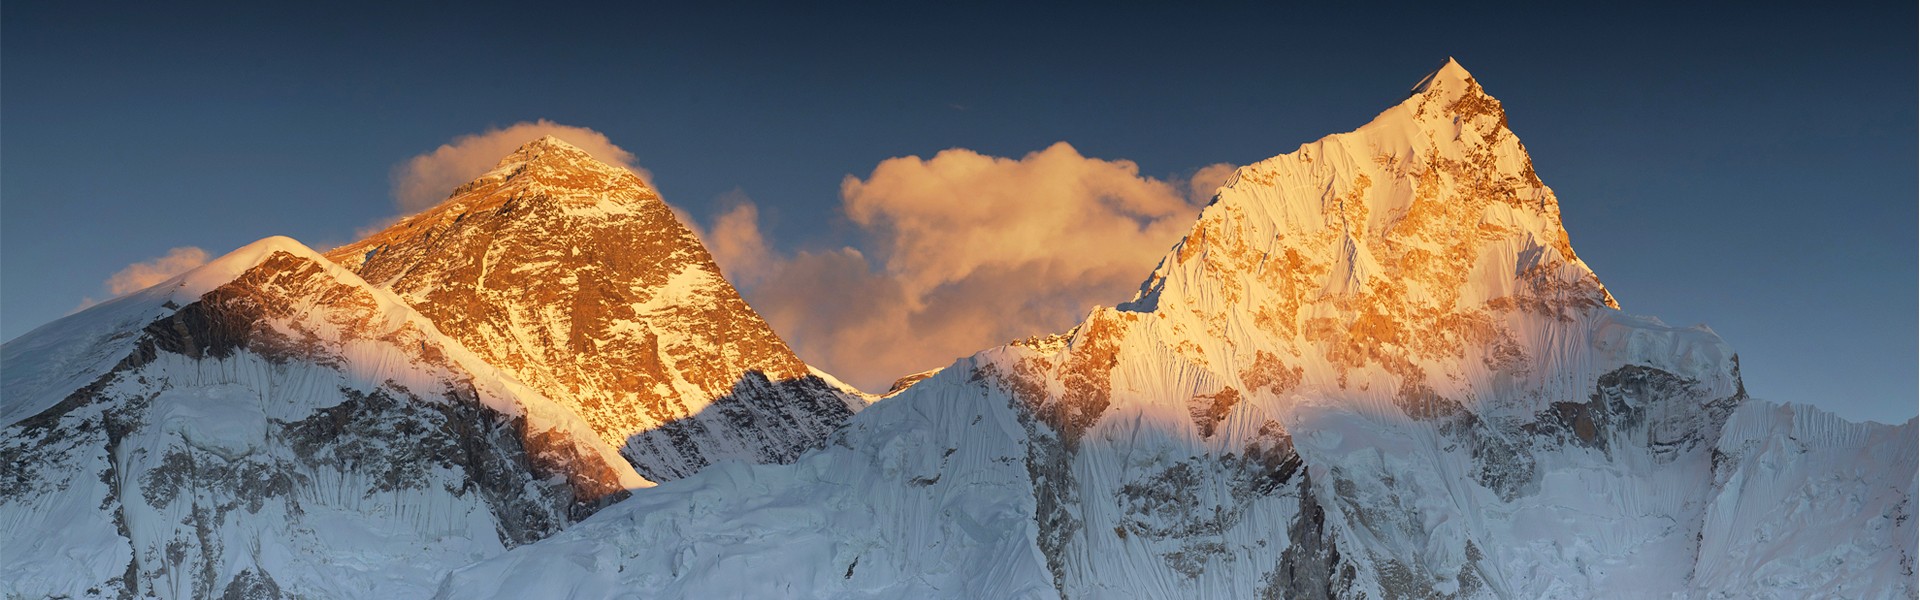 Everest- Khumbu Region